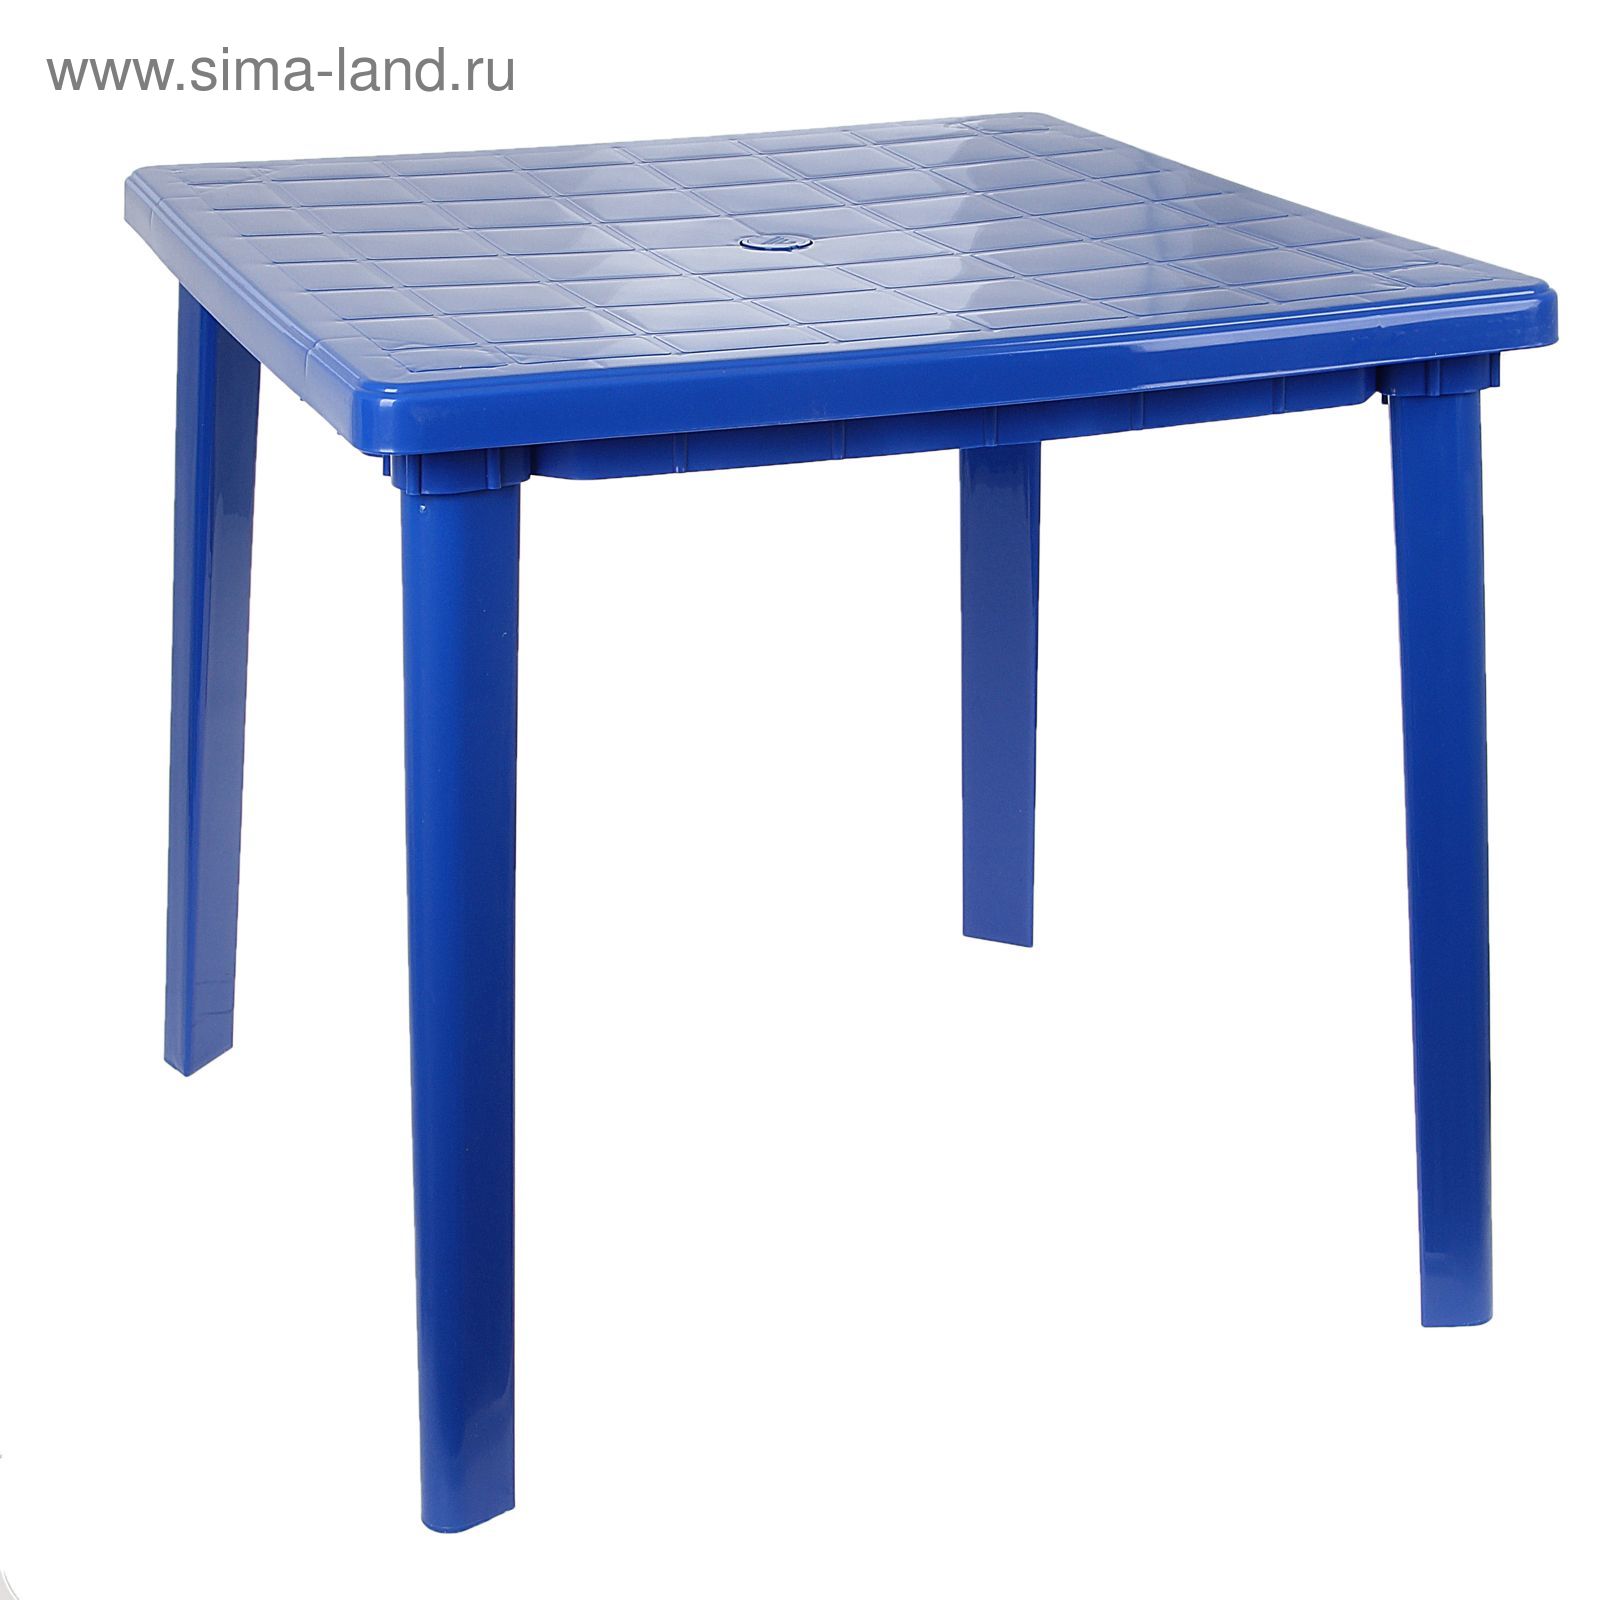 Maclay стол квадратный, размер 80 х 80 х 74 см, цвет синий 1350932